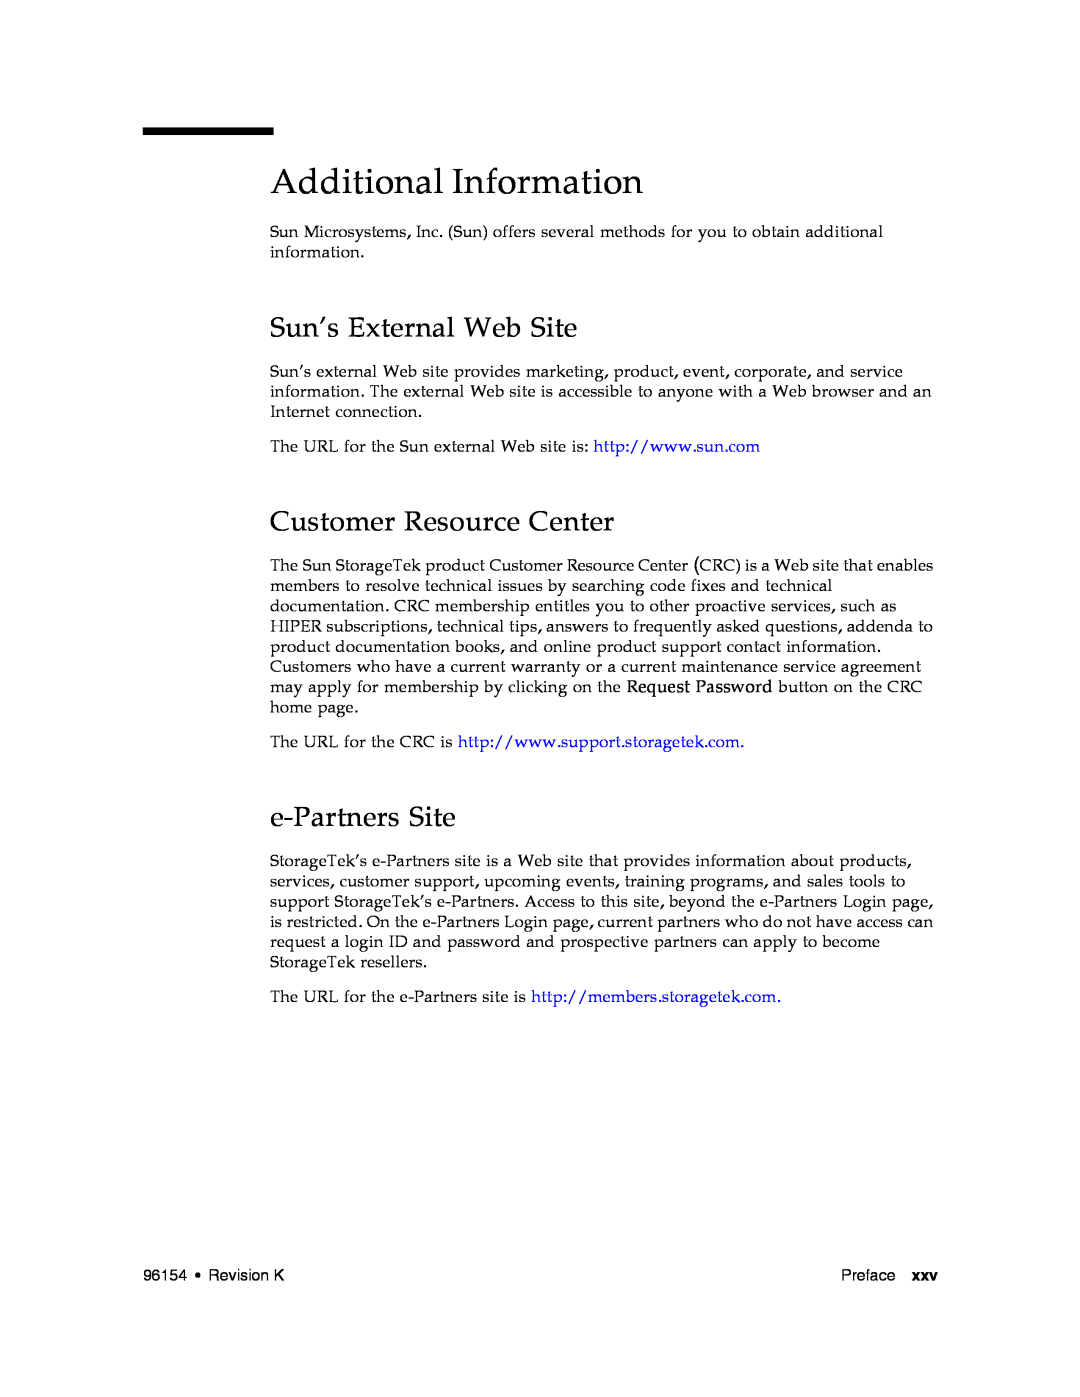 Sun Microsystems SL8500 manual Additional Information, Sun’s External Web Site, Customer Resource Center, e-Partners Site 